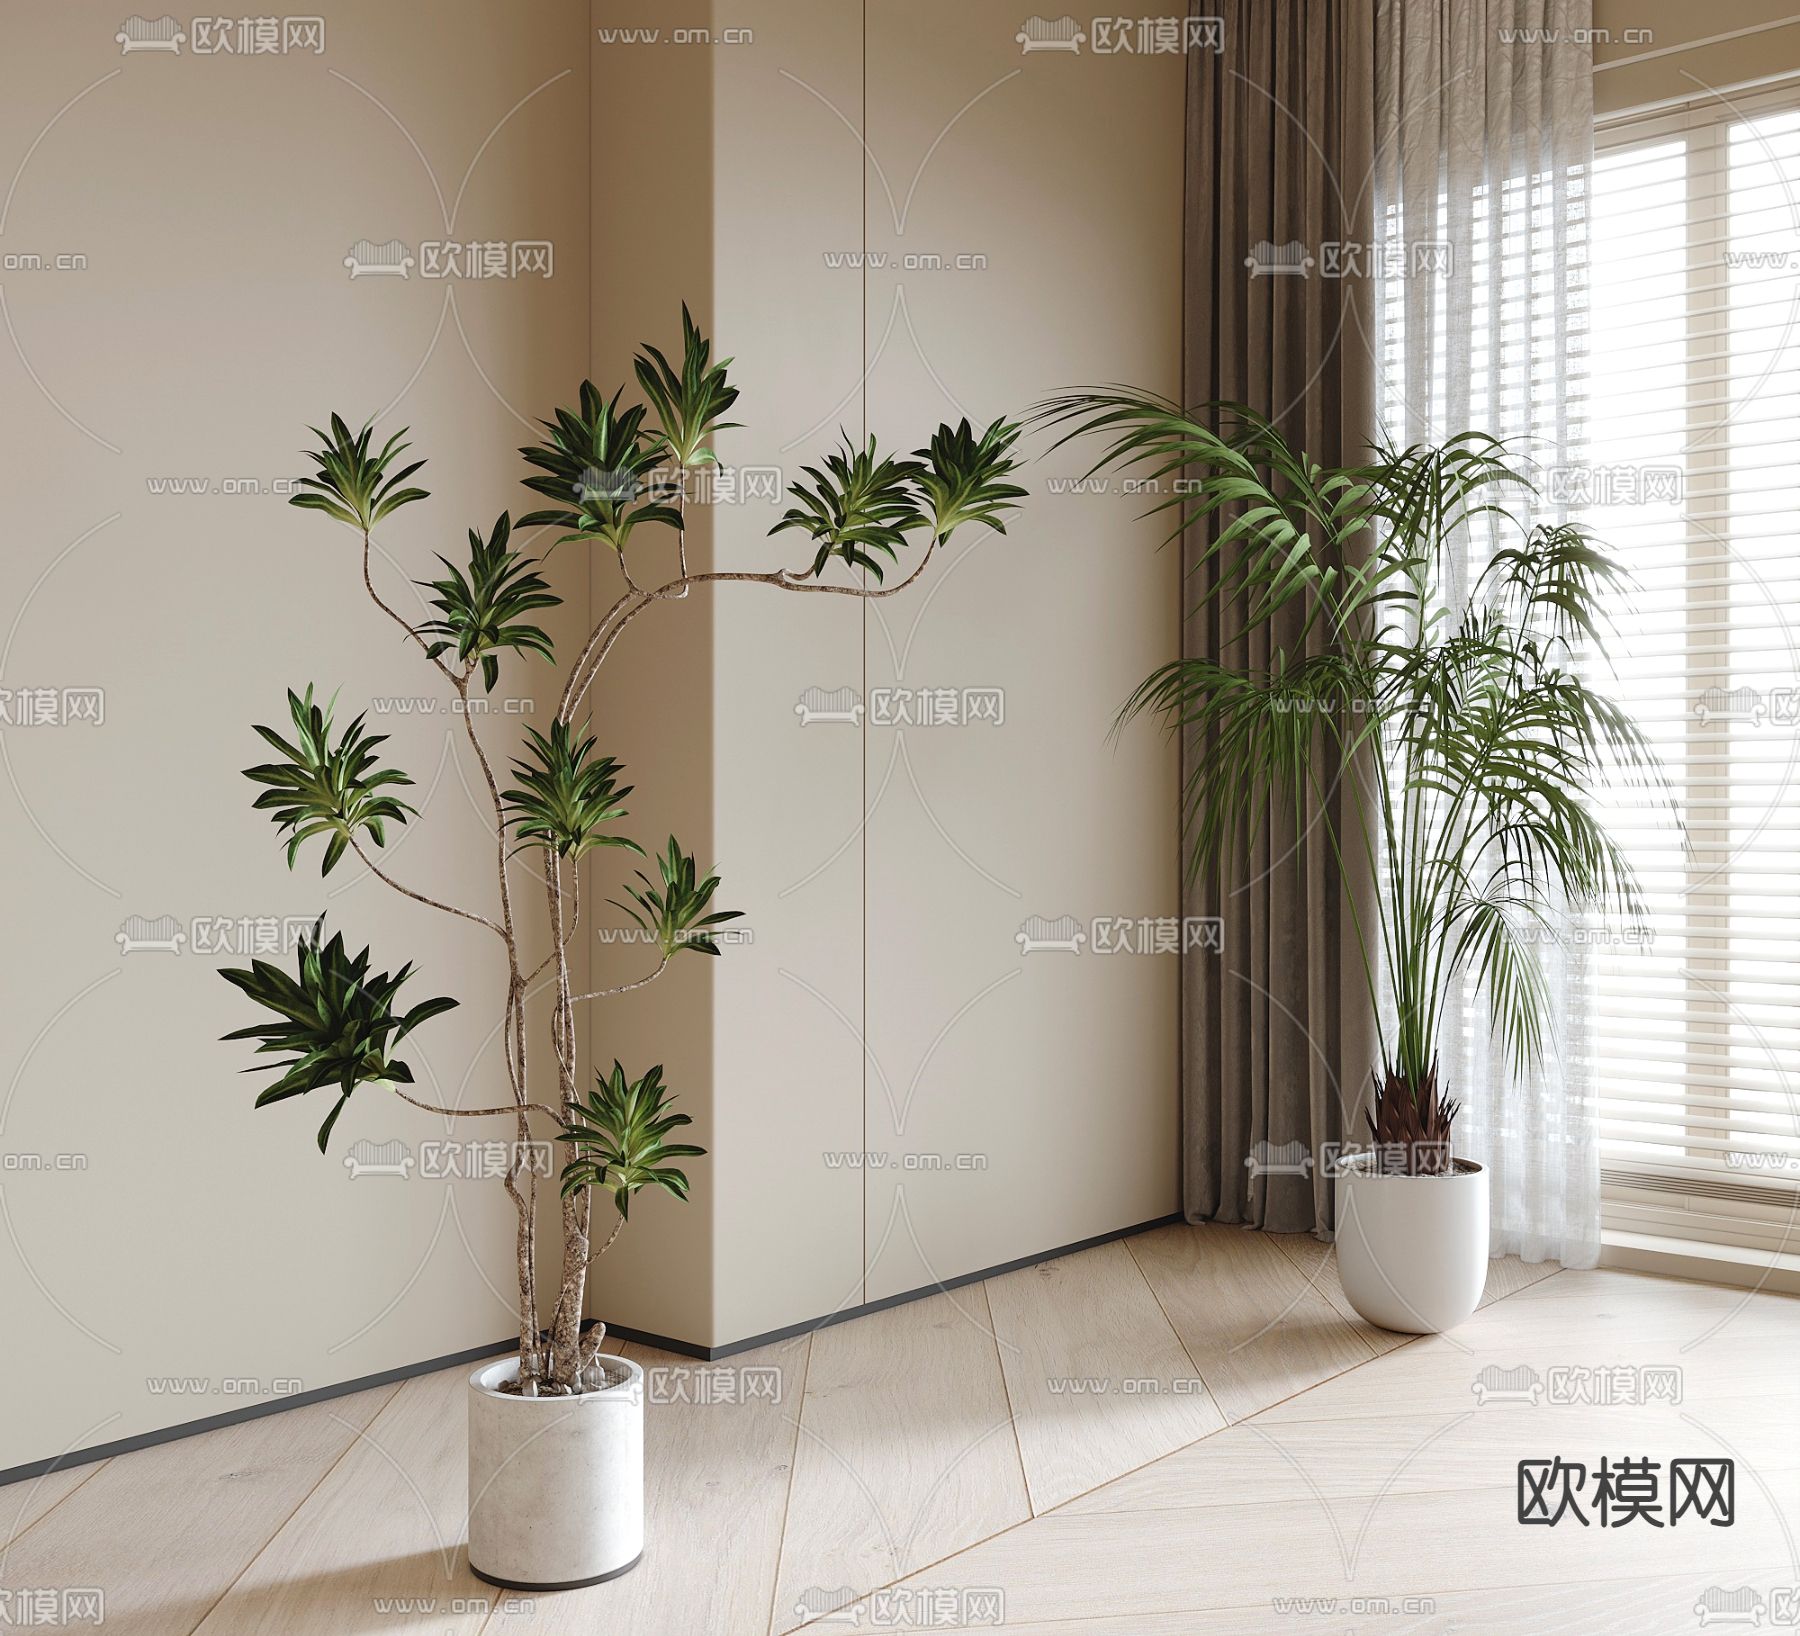 Plant – VRAY / CORONA – 3D MODEL – 463 - thumbnail 1